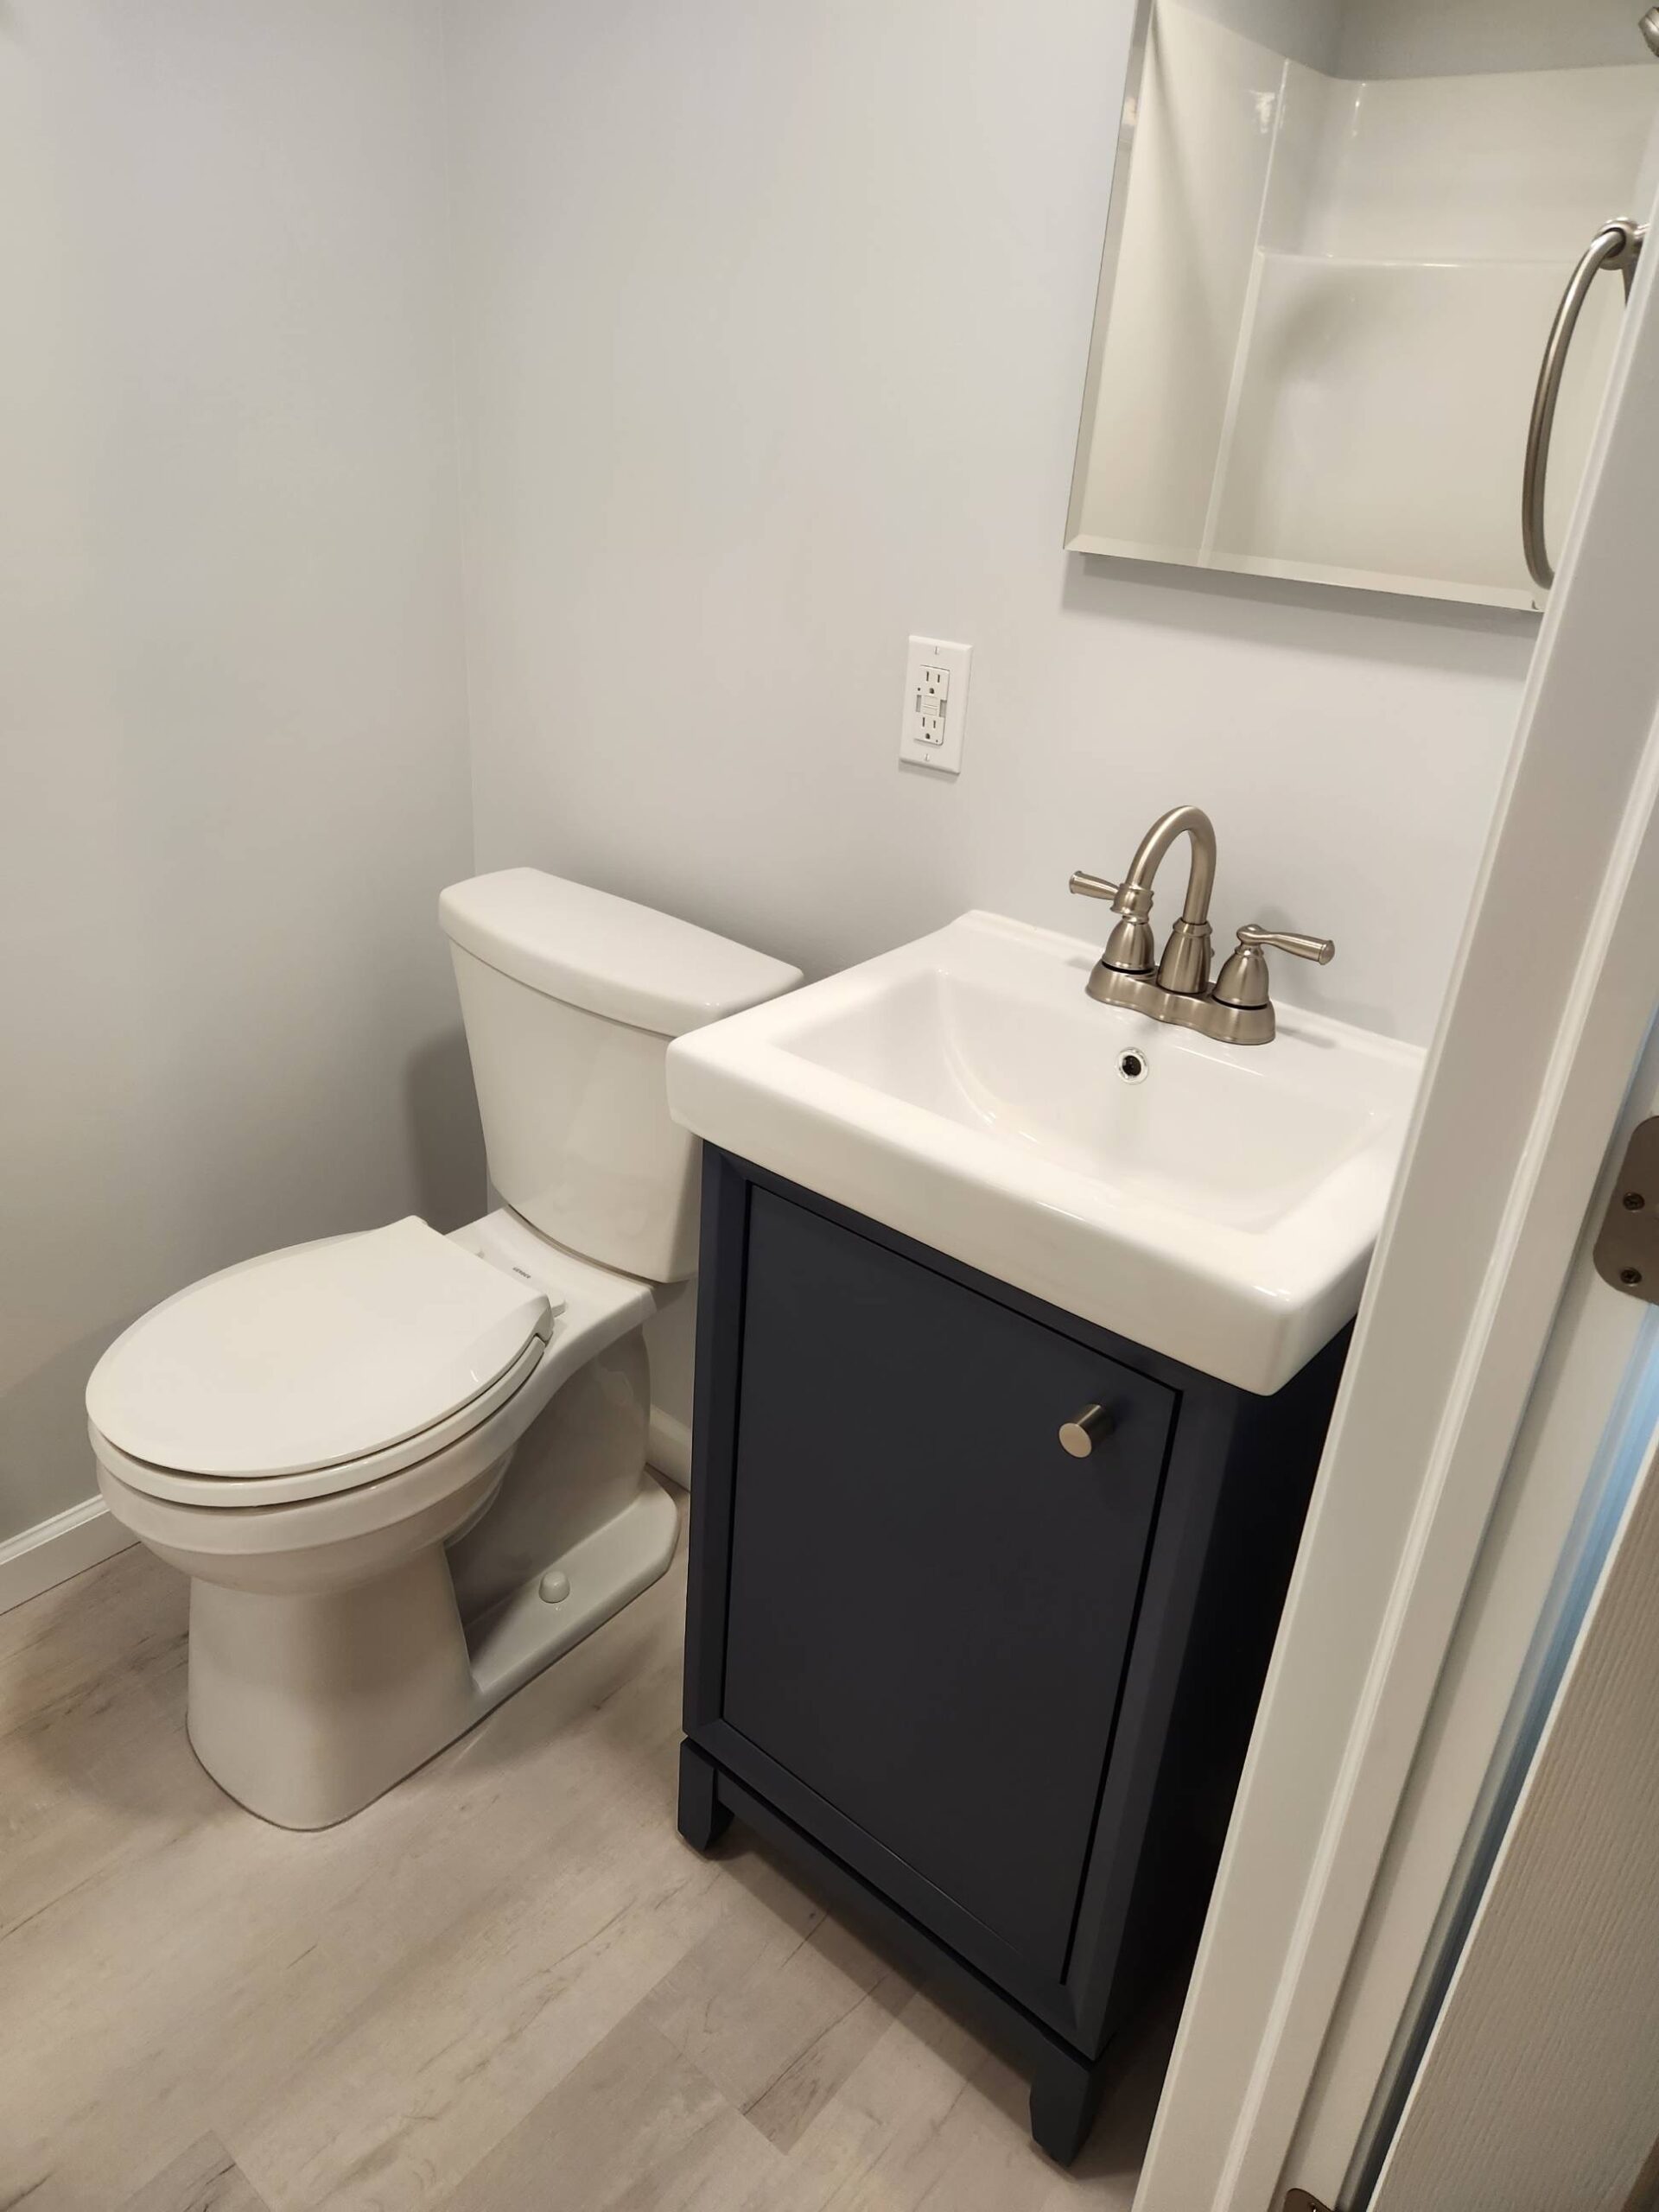 Basement 3/4-Bathroom Remodel